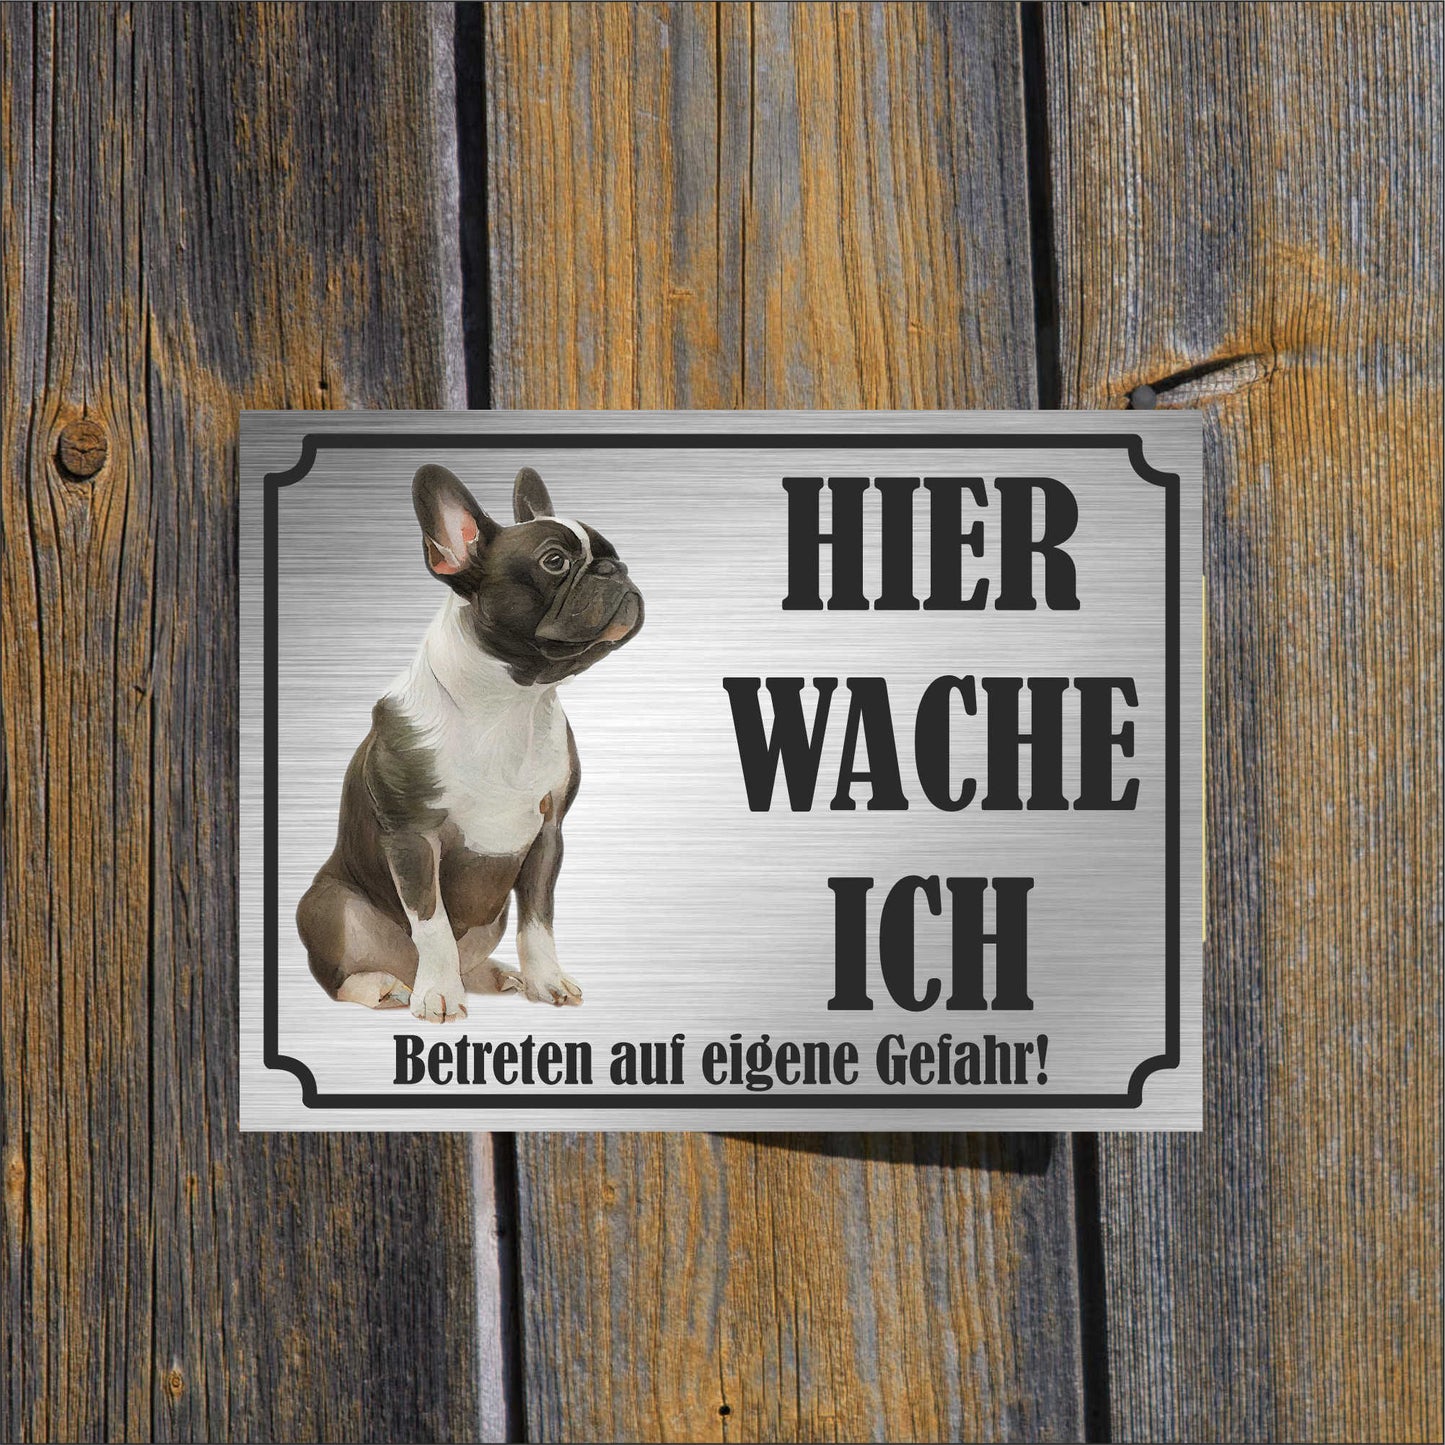 Deutsche Dogge - Schild bedruckt - Hier wache ich - Aluverbundplatte Edelstahl Look